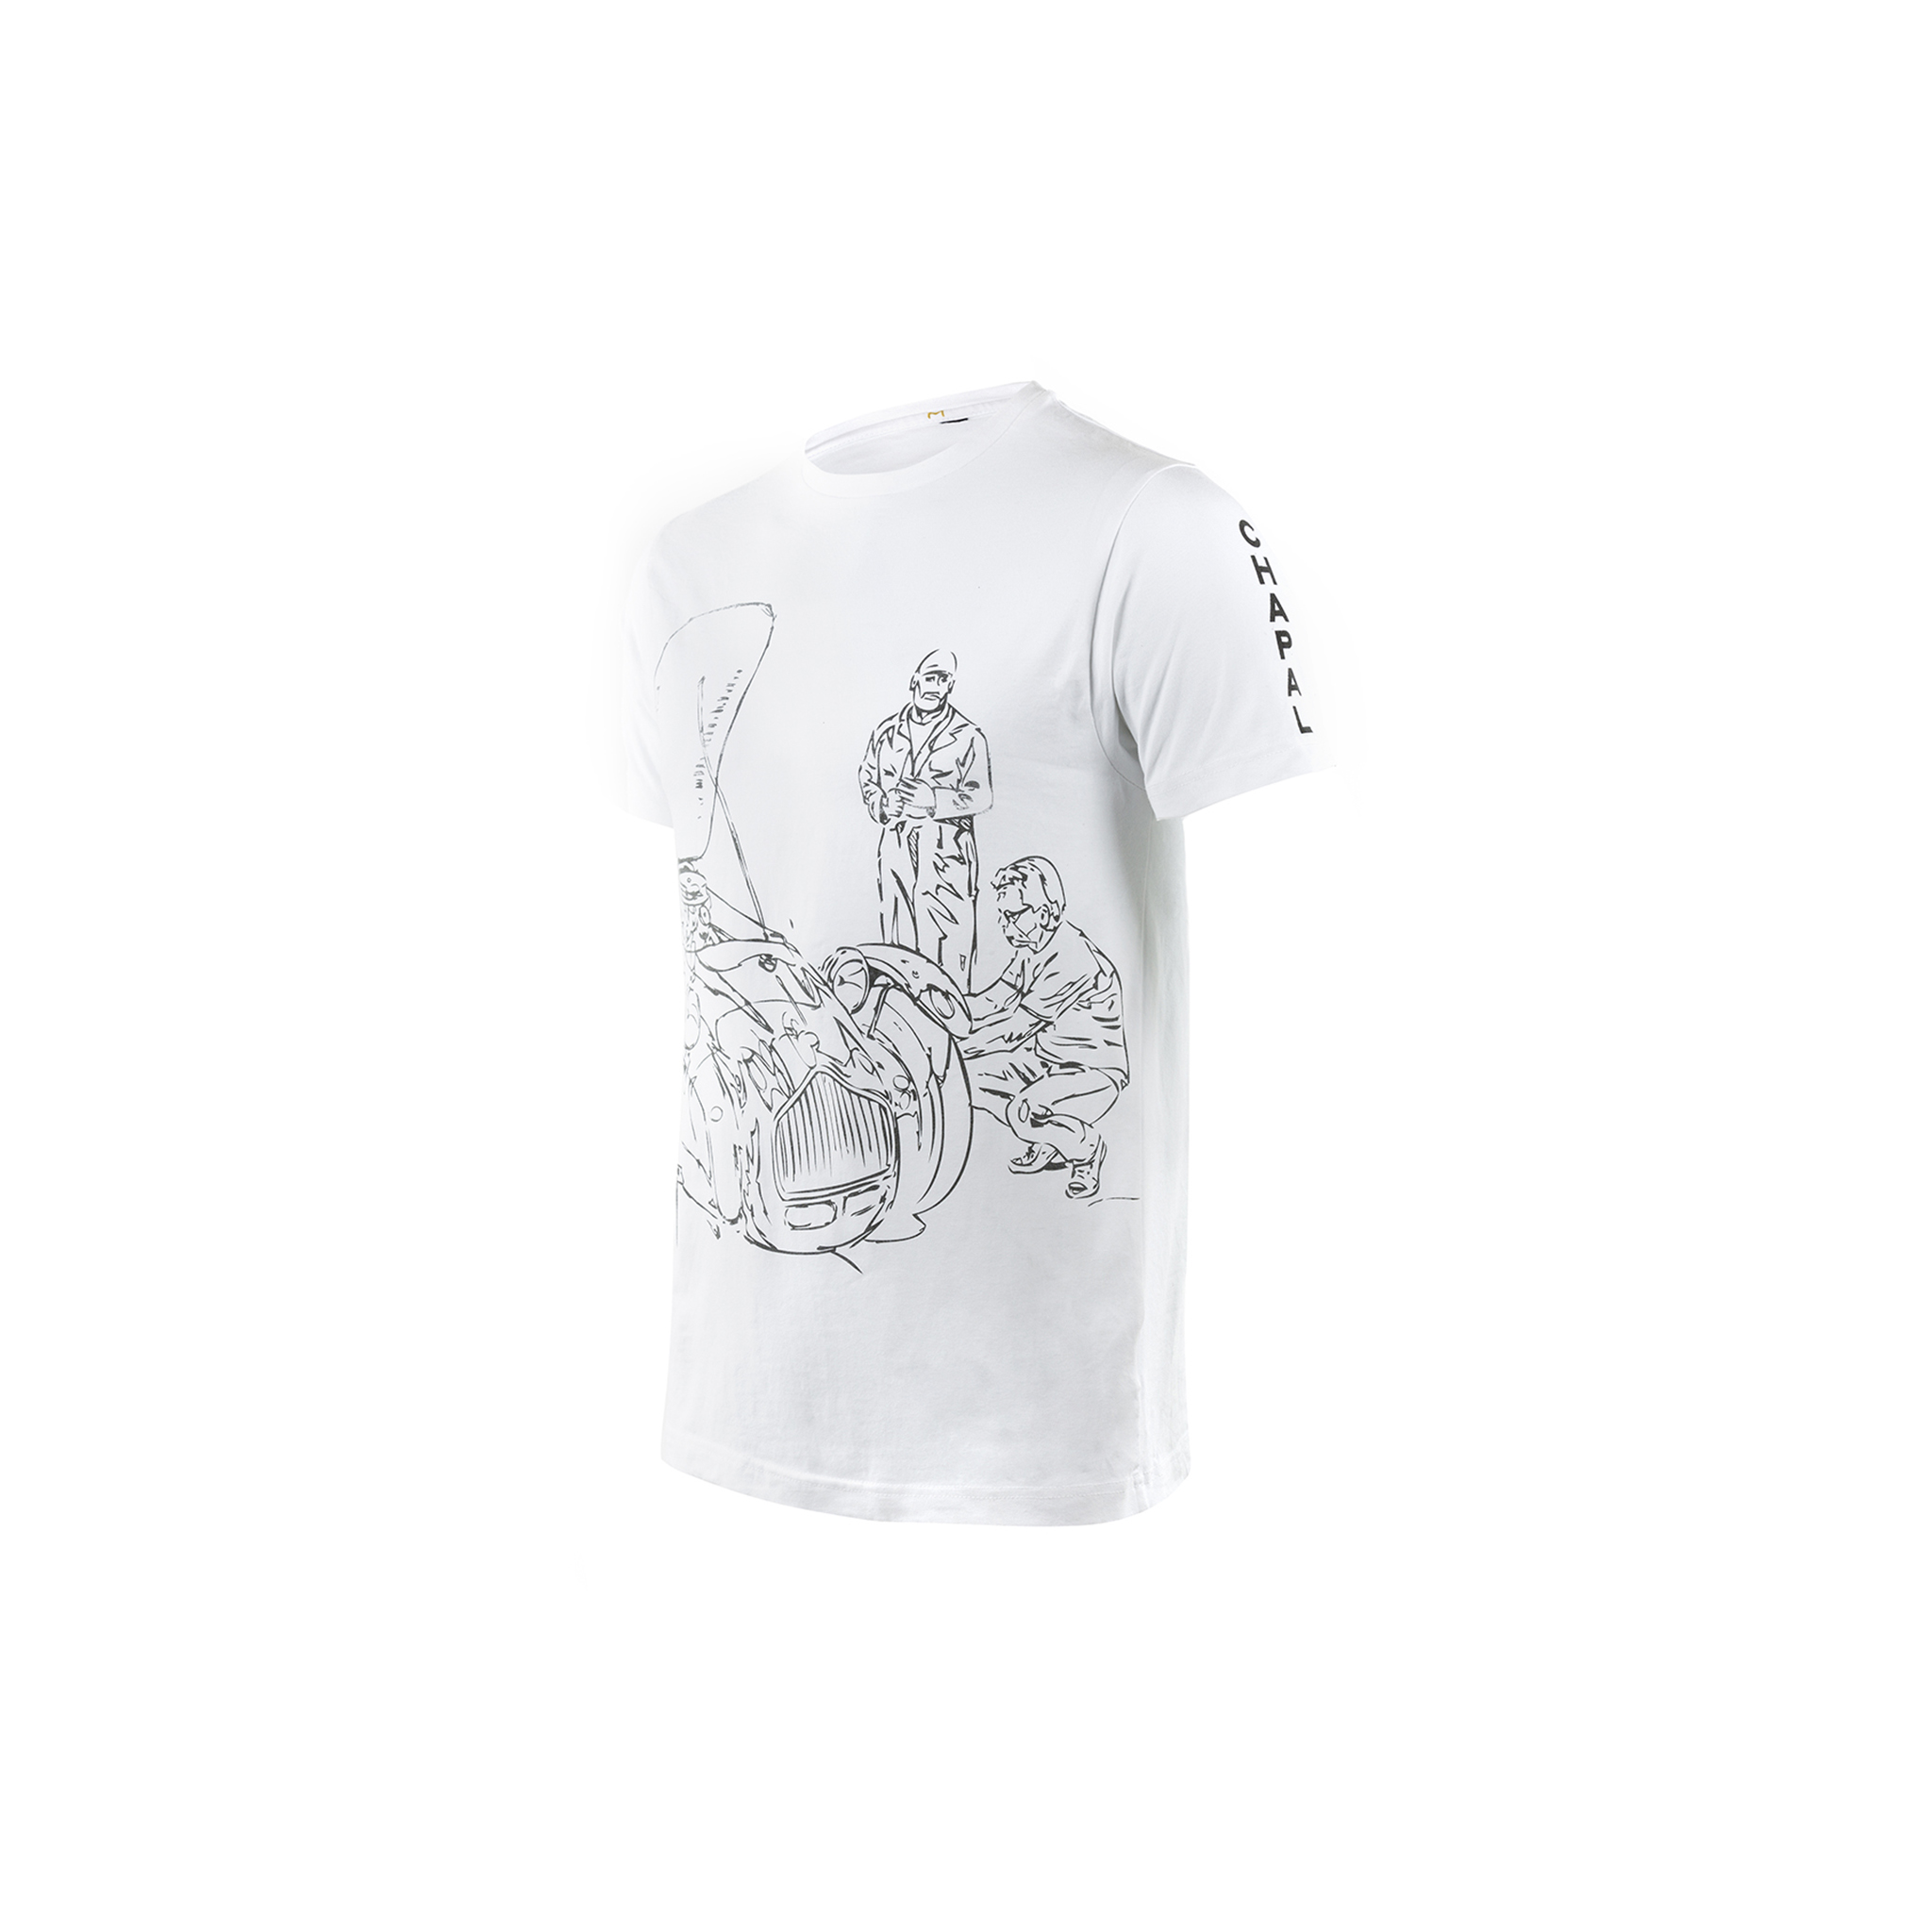 T-shirt Allard - Cotton jersey - White color